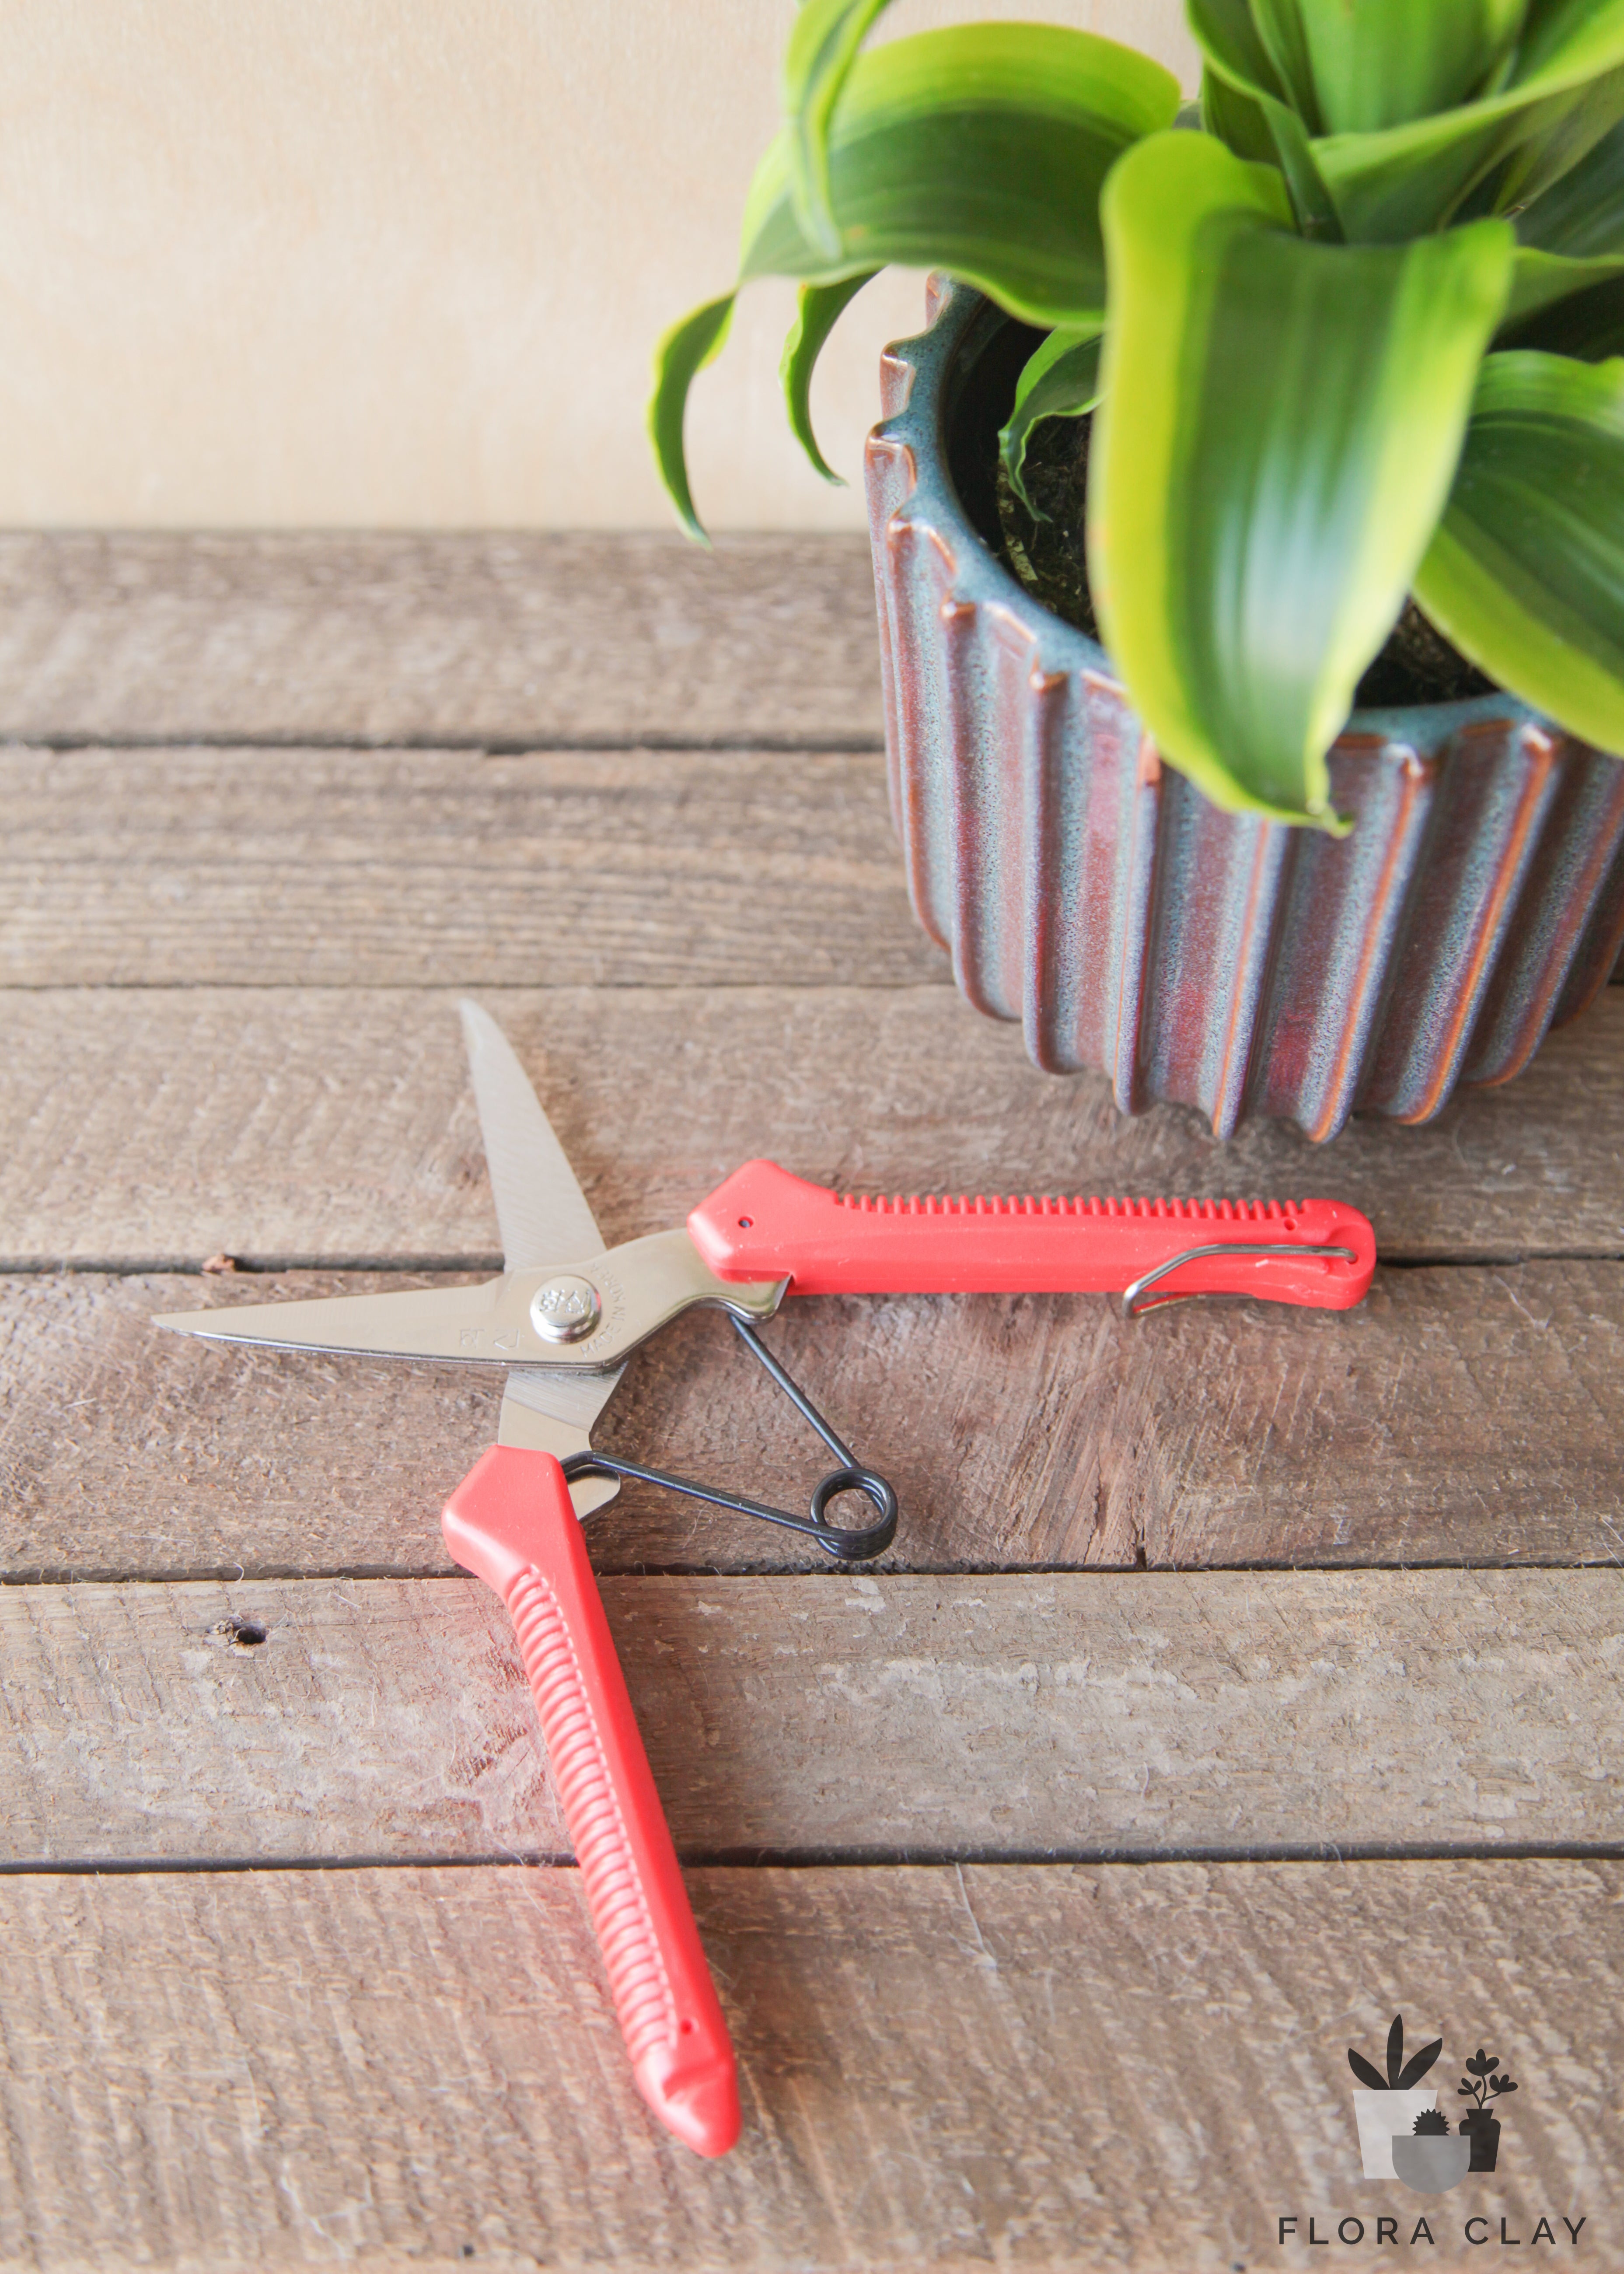 all-purpose-gardening-scissors-supply-floraclay-2.jpg